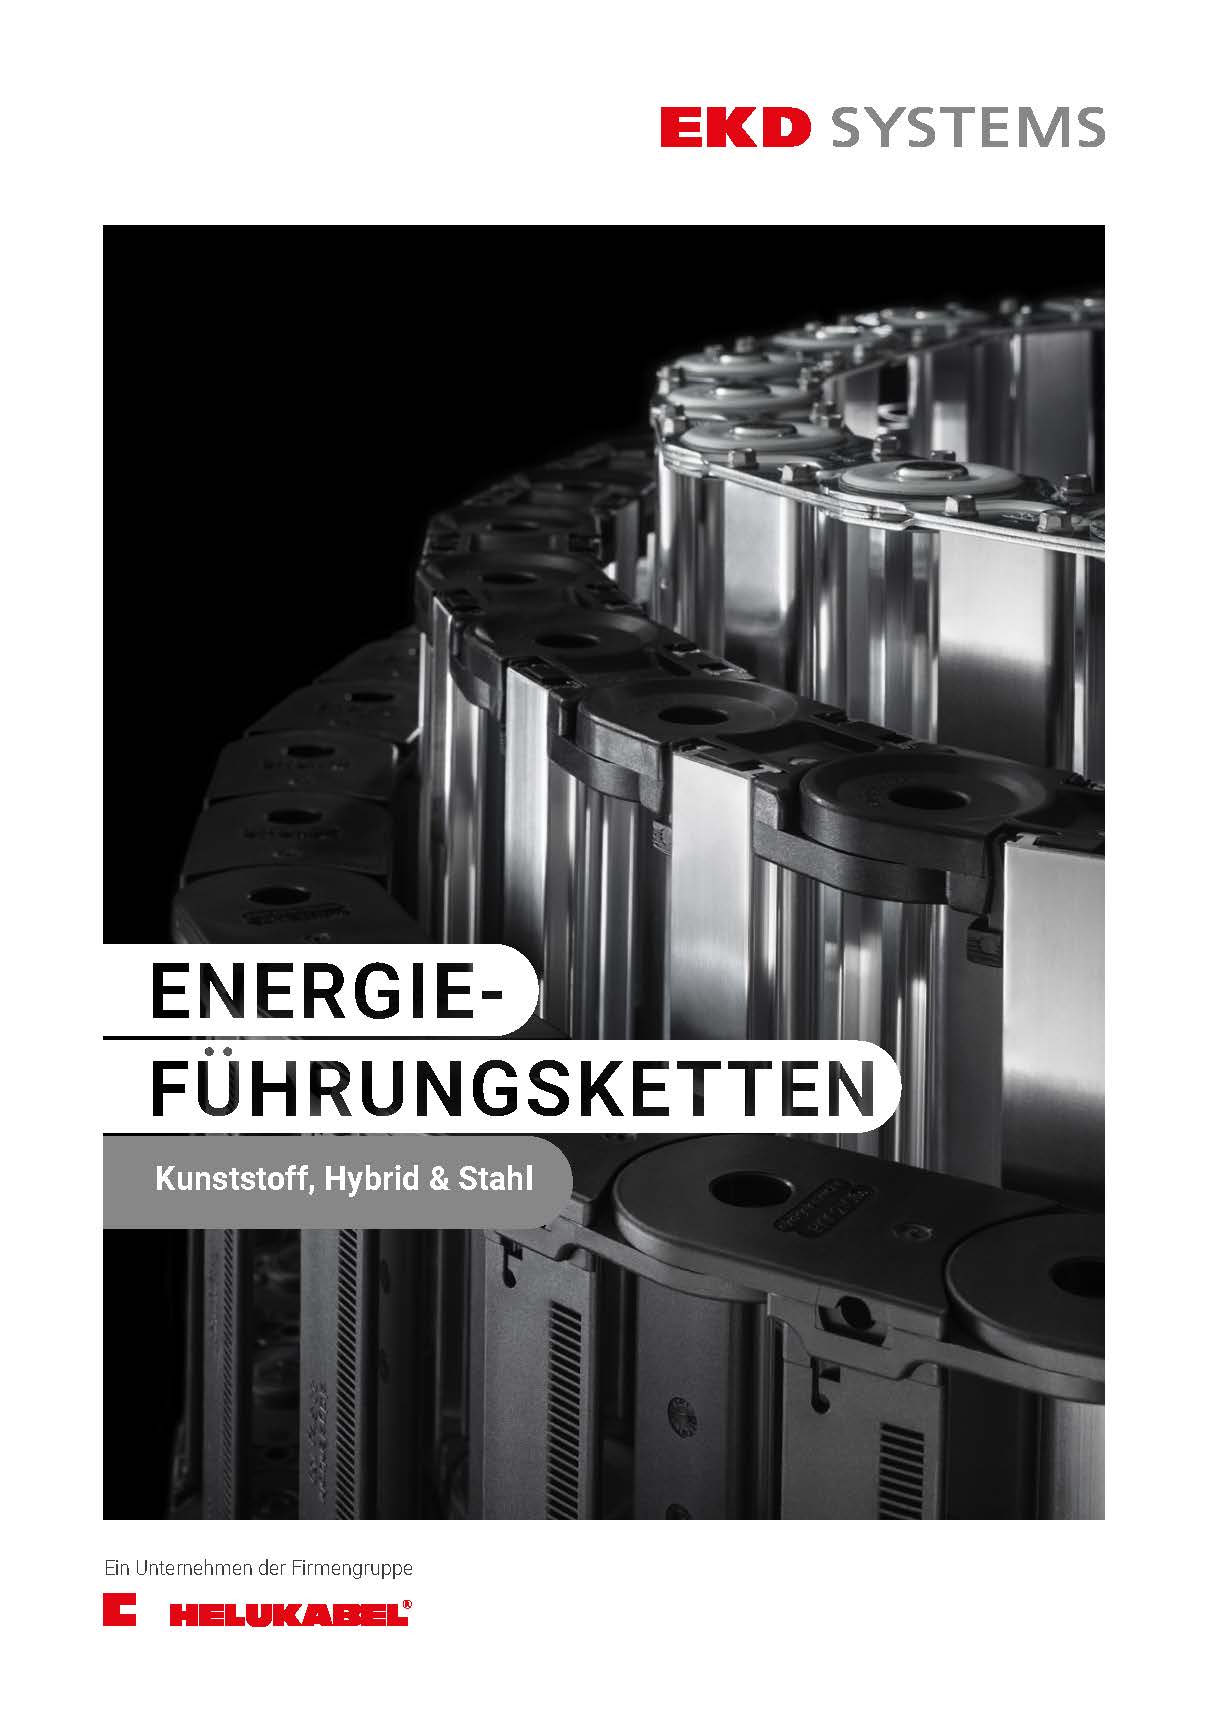 Energieführungsketten - Kunststoff, Hybrid & Stahl